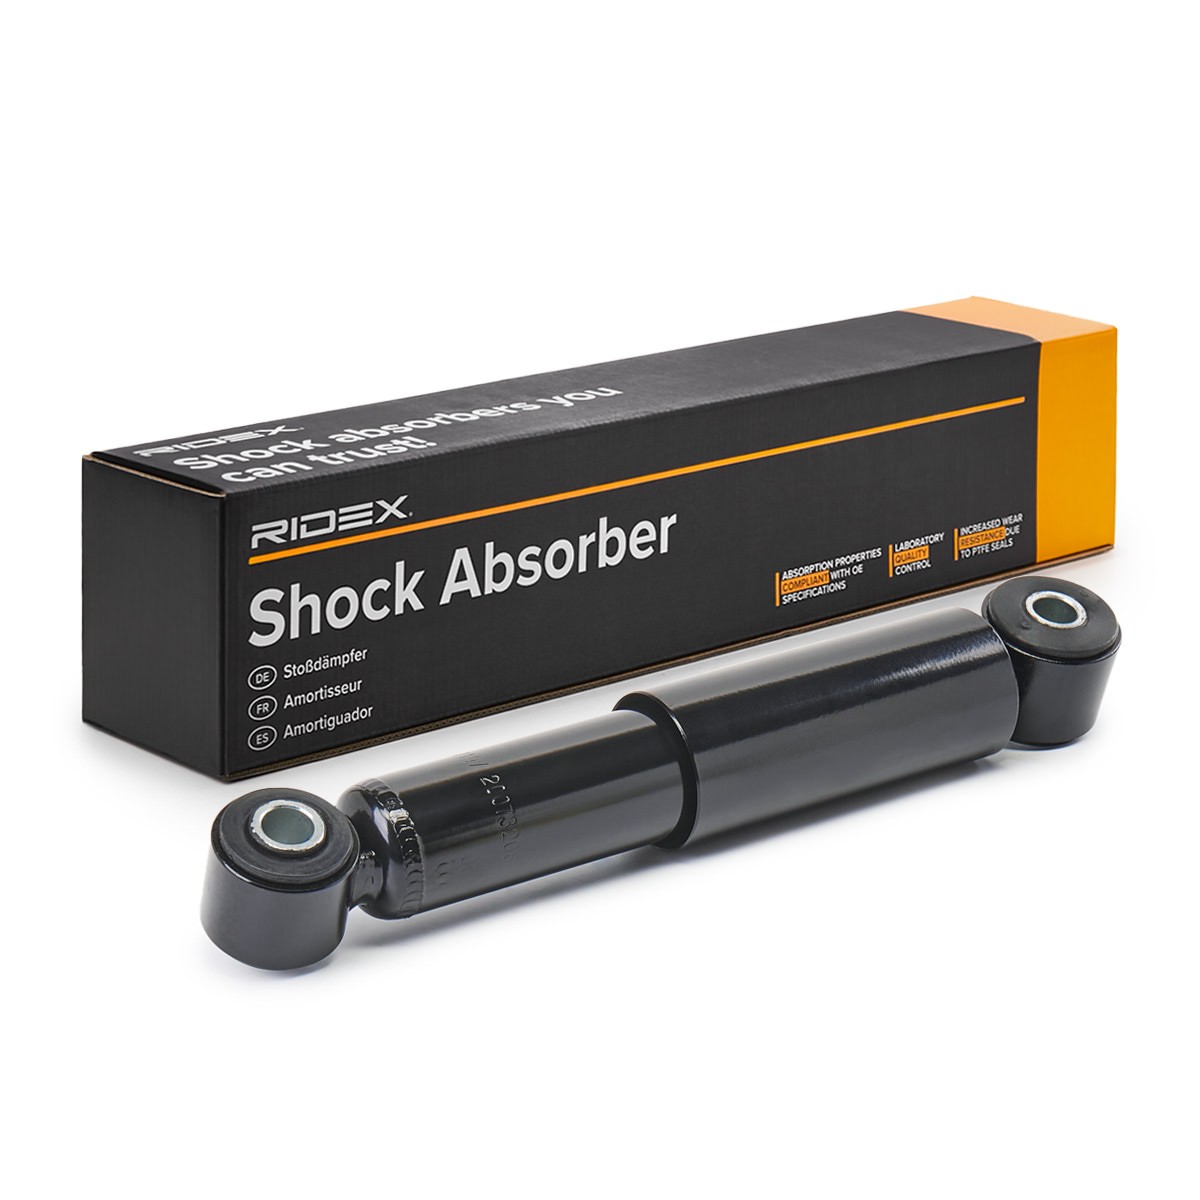 RIDEX 854S18988 Shock absorber A639 326 08 00